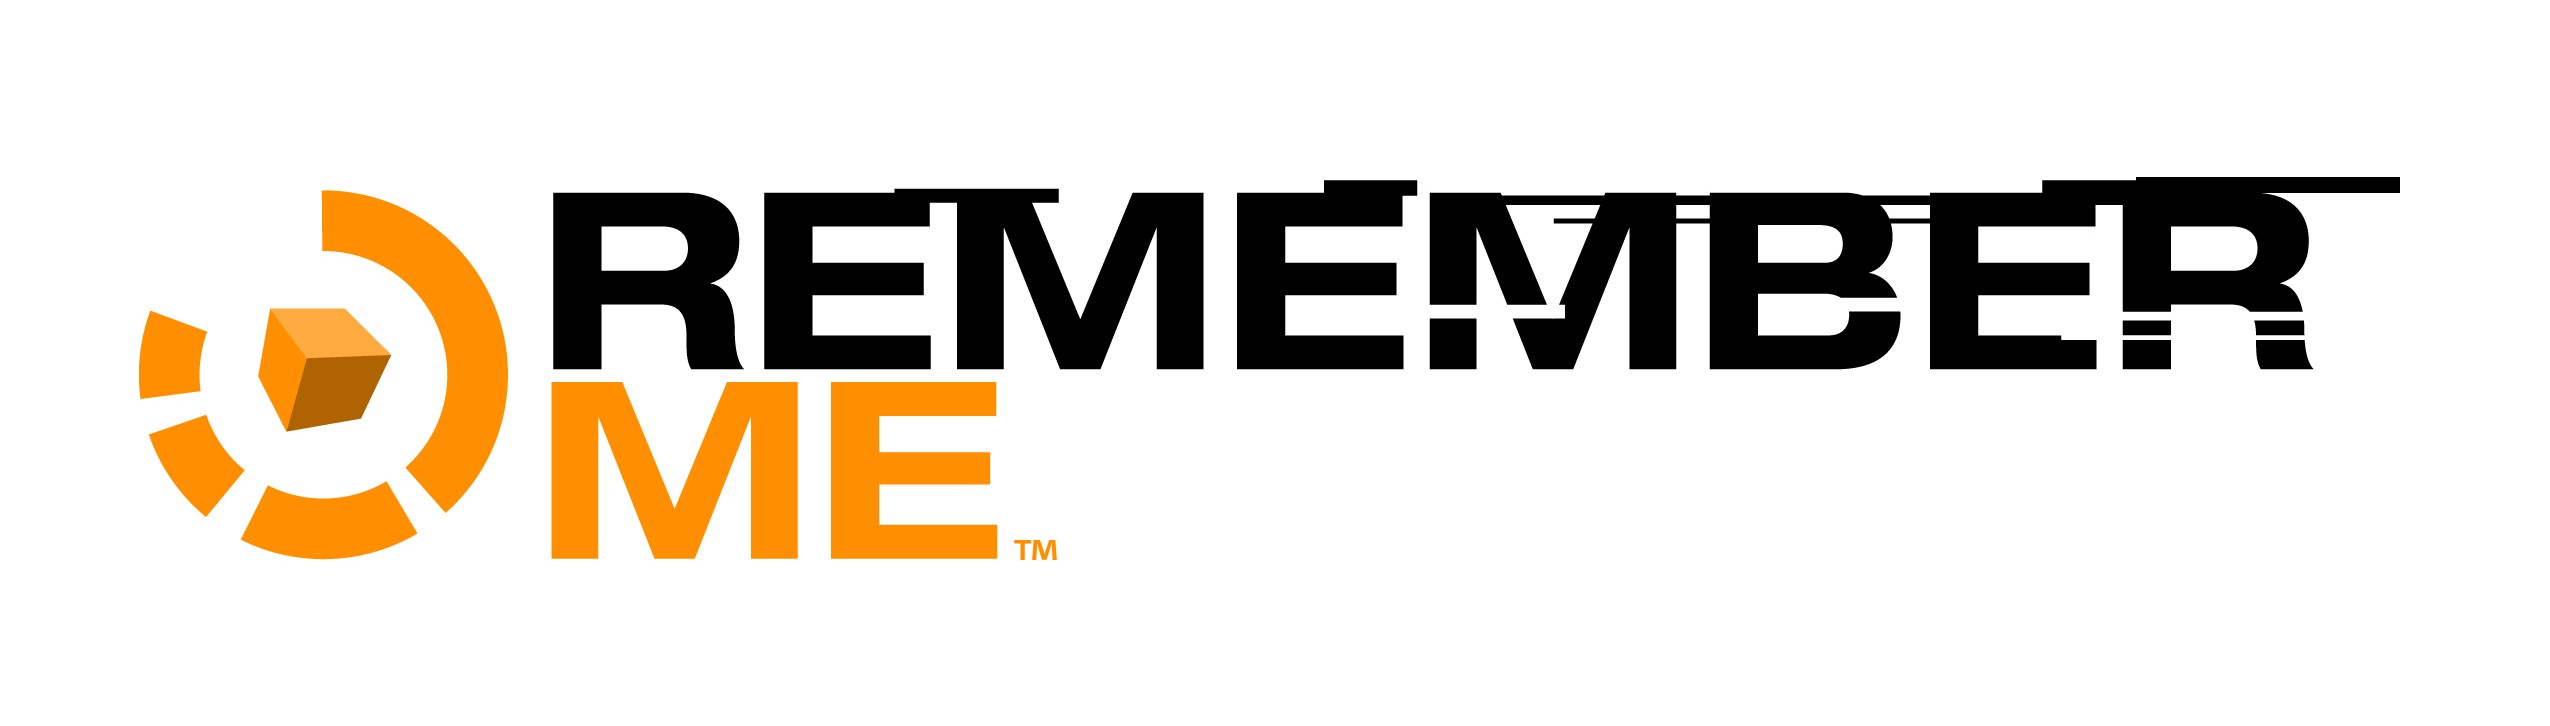 Сайт remember remember бонус пикс. Remember me logo. Remember me (2013). Репак ми. Remember me icon.